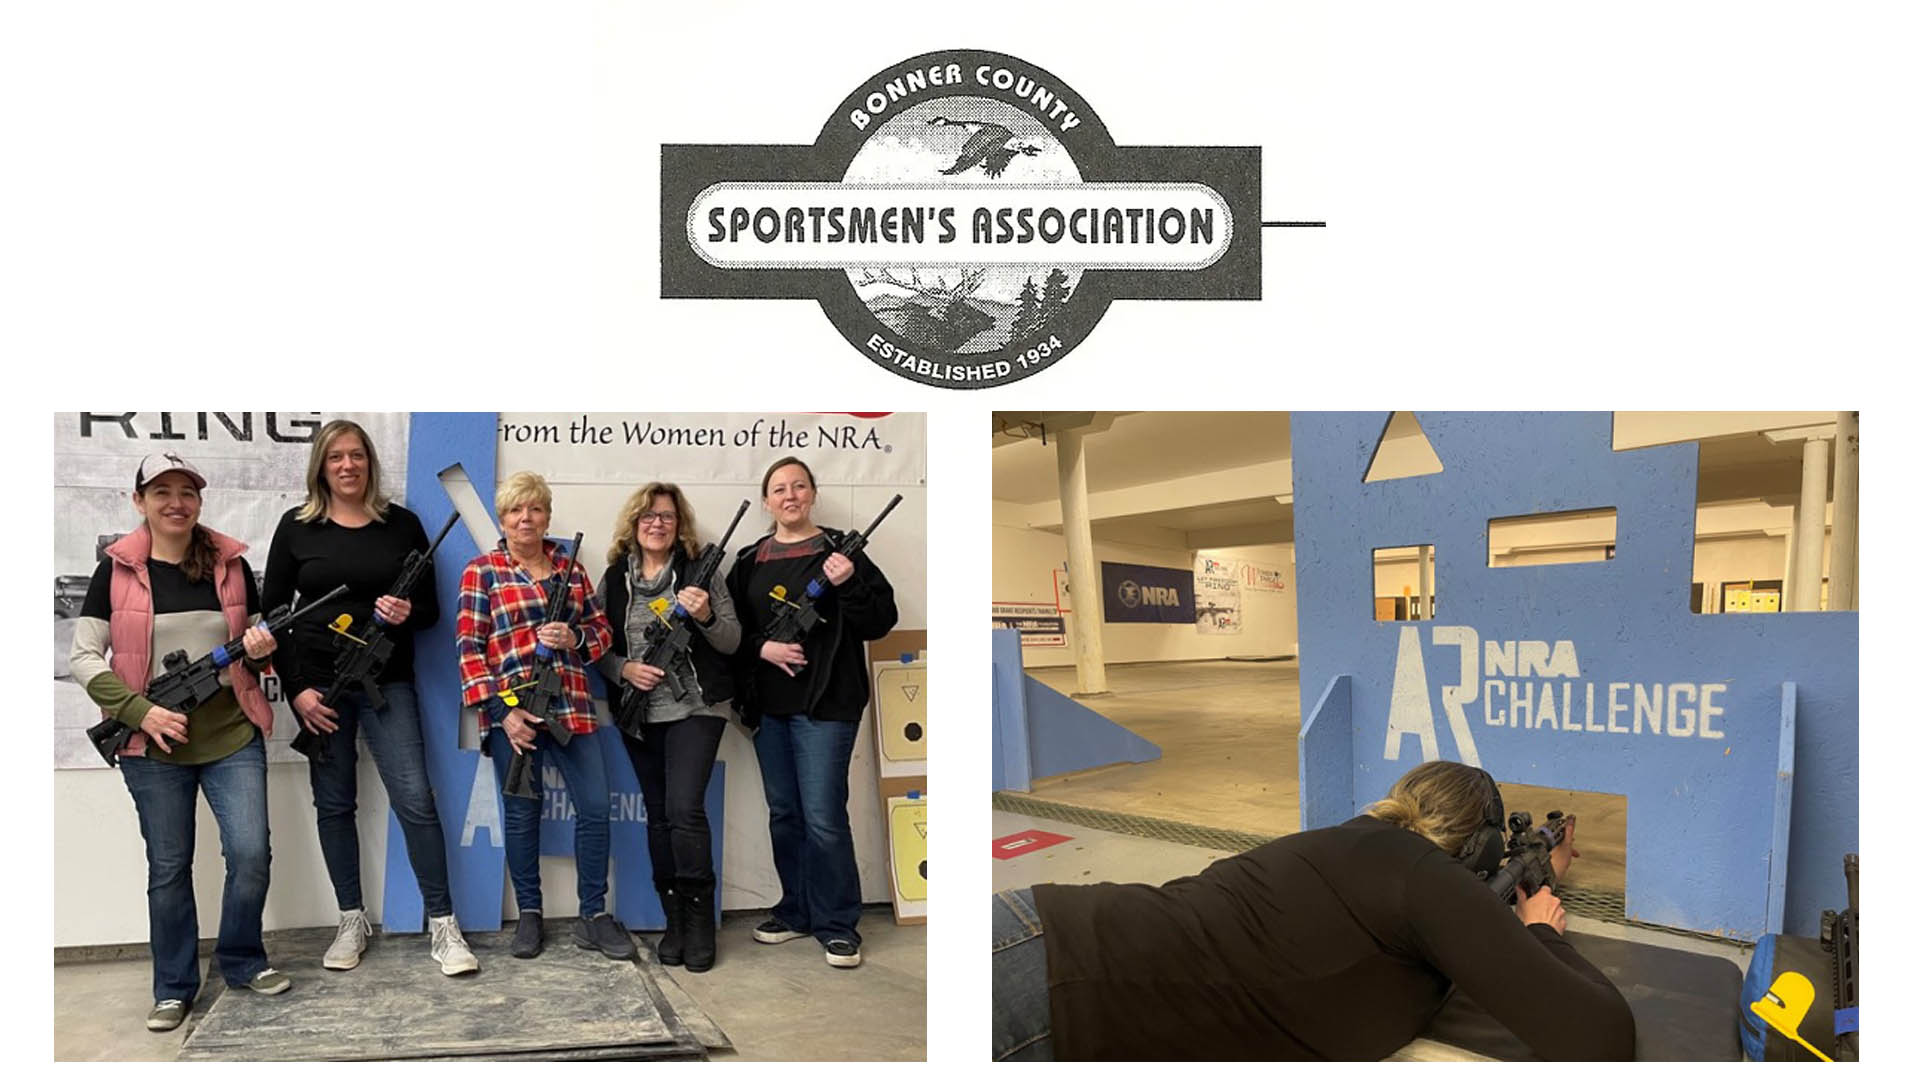 Bonner County Sportsmen's association shooting range nra ar challenge women with guns